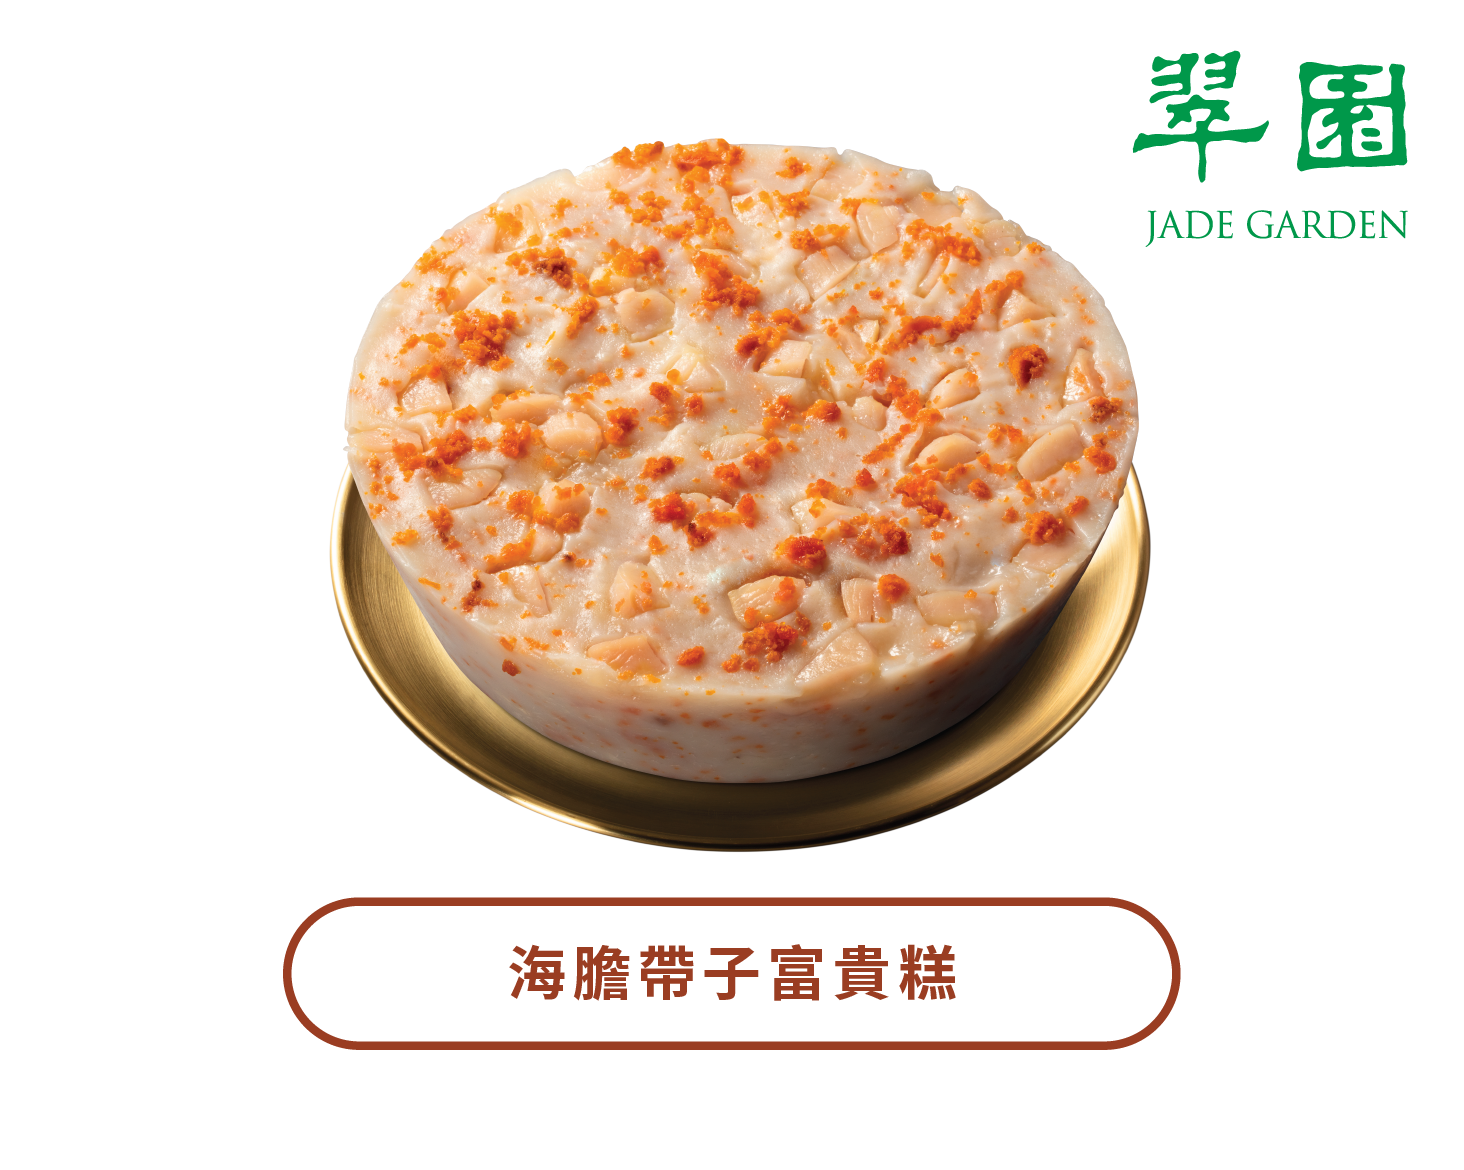 JADE GARDEN | Sea Urchin and Scallop Rice Pudding (Physical Coupon)